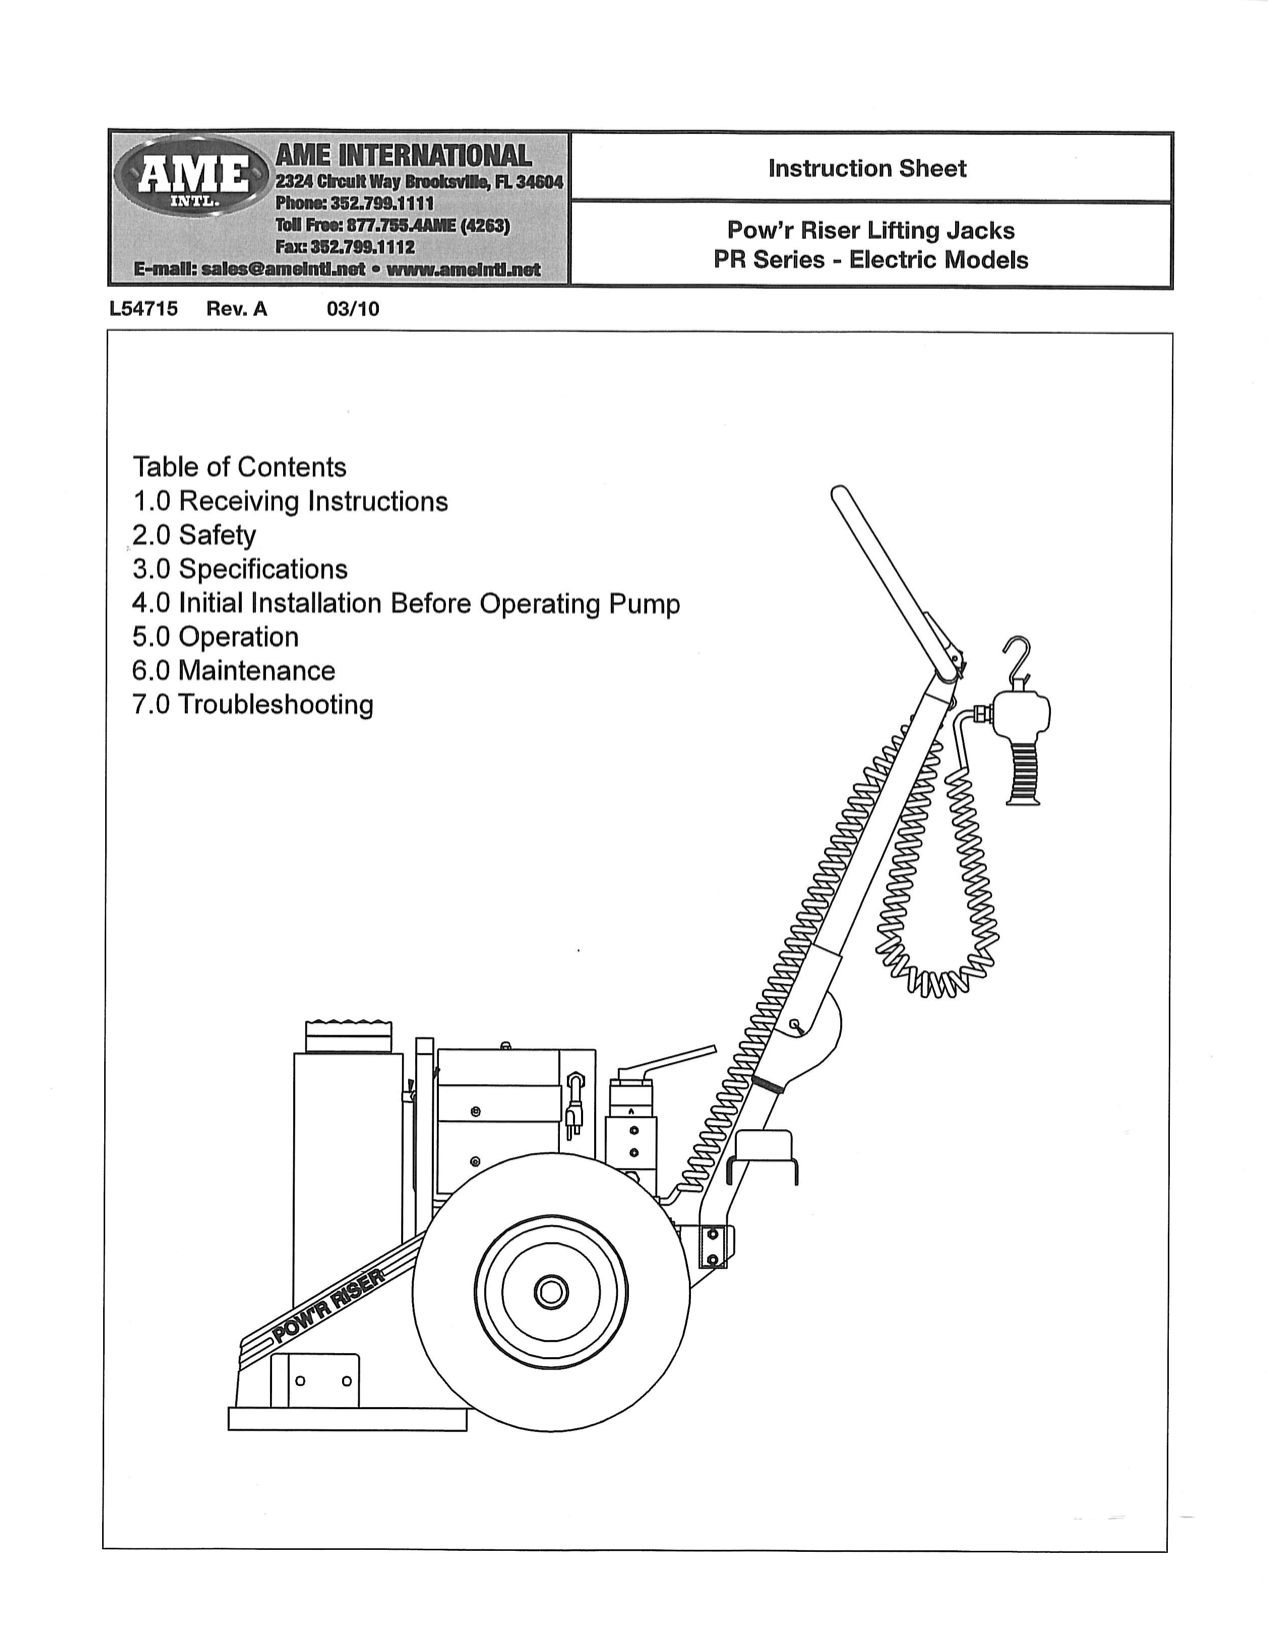 Pow'r Riser Electric Instructions PDF